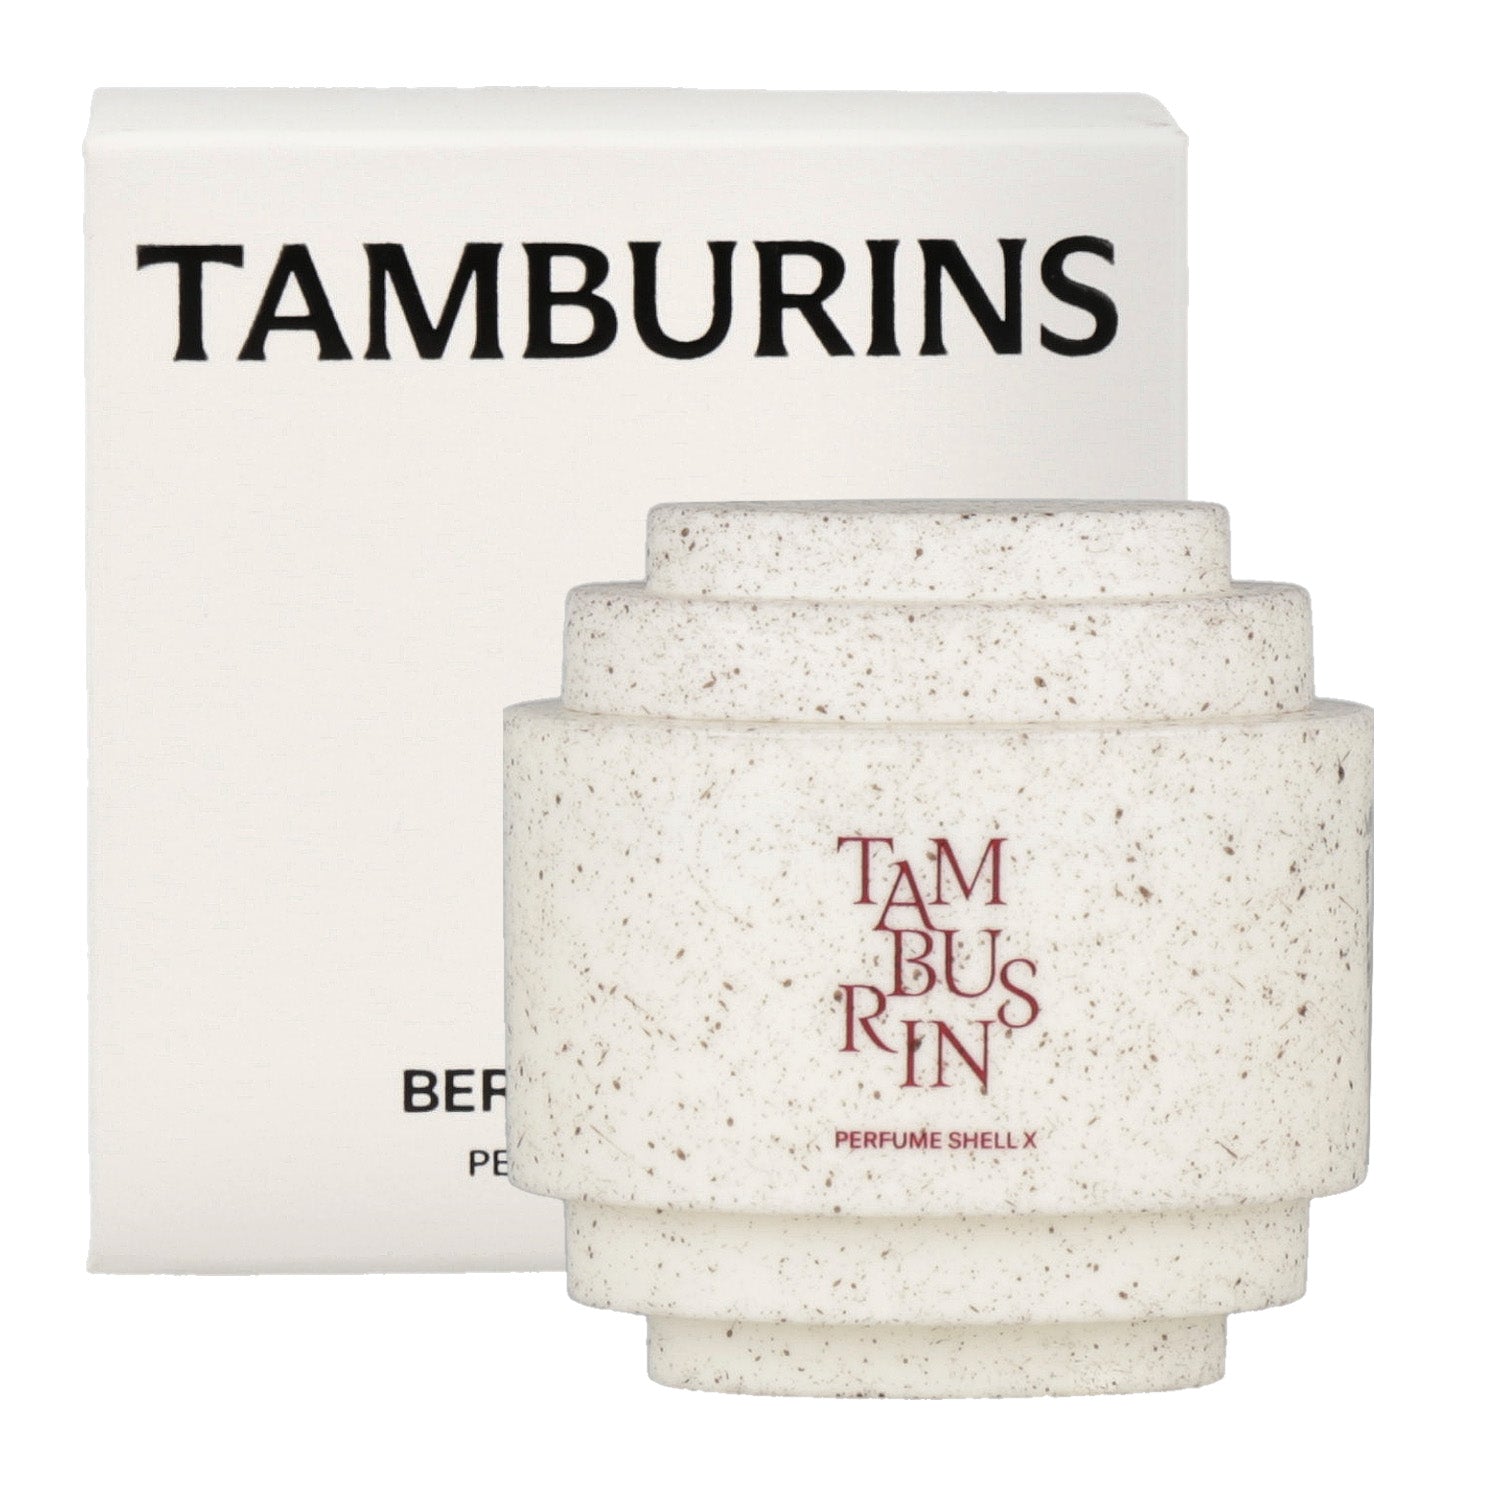 TAMBURINS PERFUME SHELL X Hand Cream - BERGA SANDAL 30ml - DODOSKIN